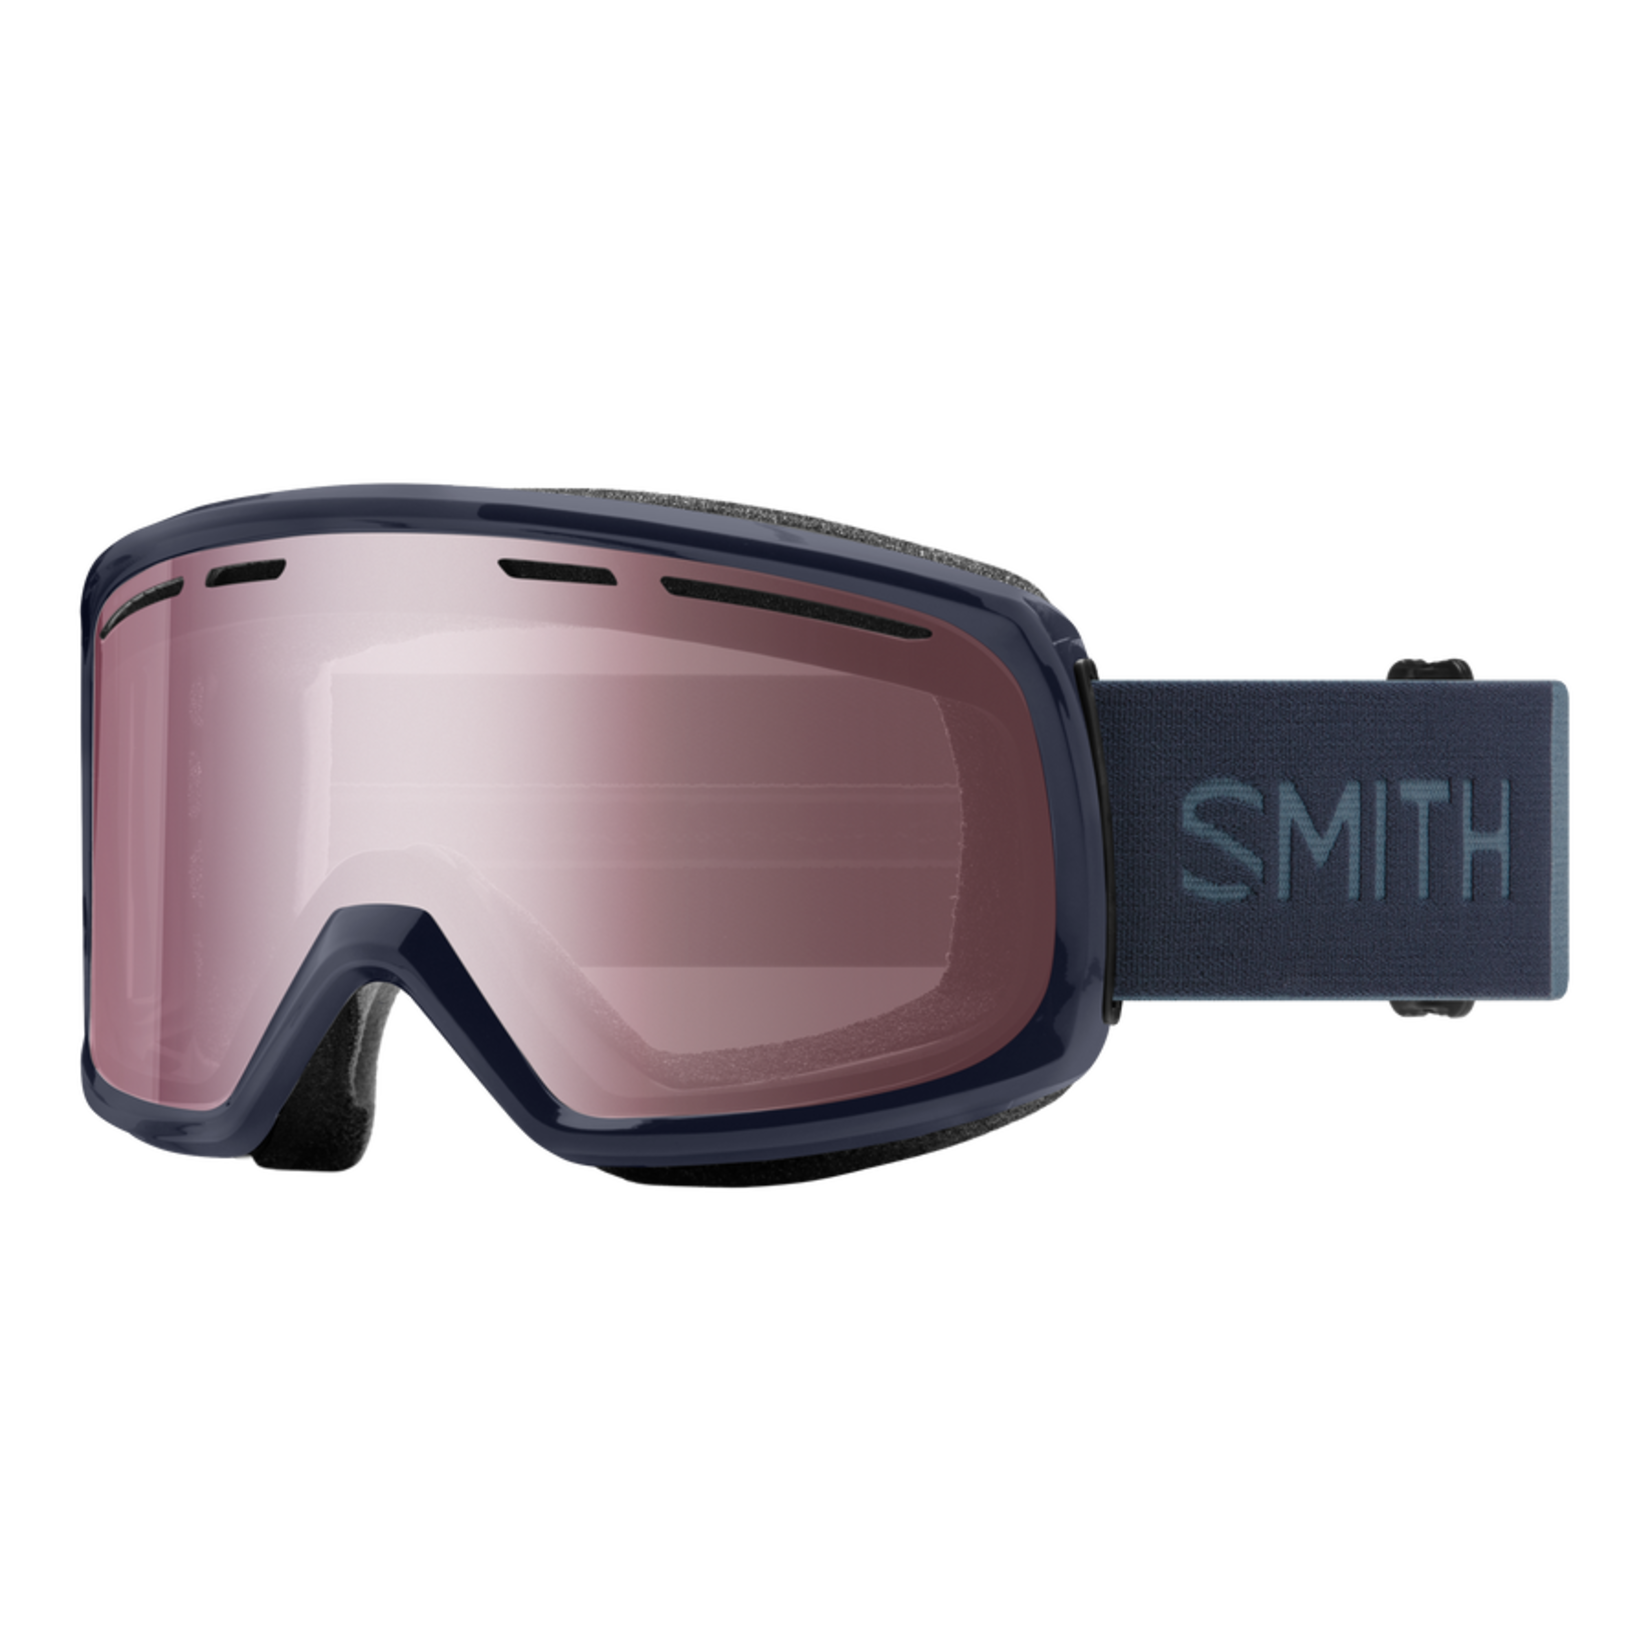 Smith Smith Range Goggles